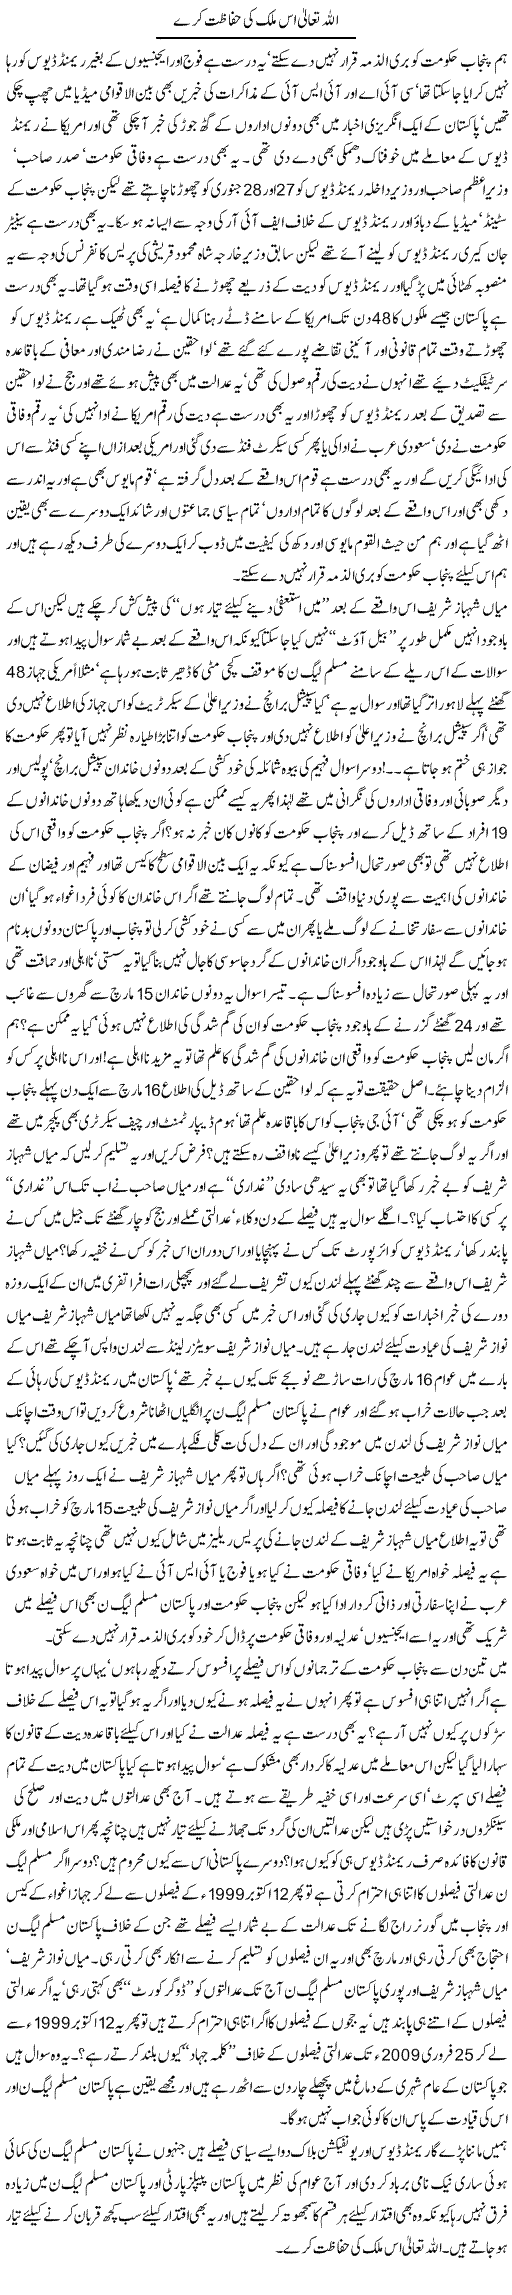 Ya Allah Help Pakistan Express Column Javed Chaudhry 20 March 2011